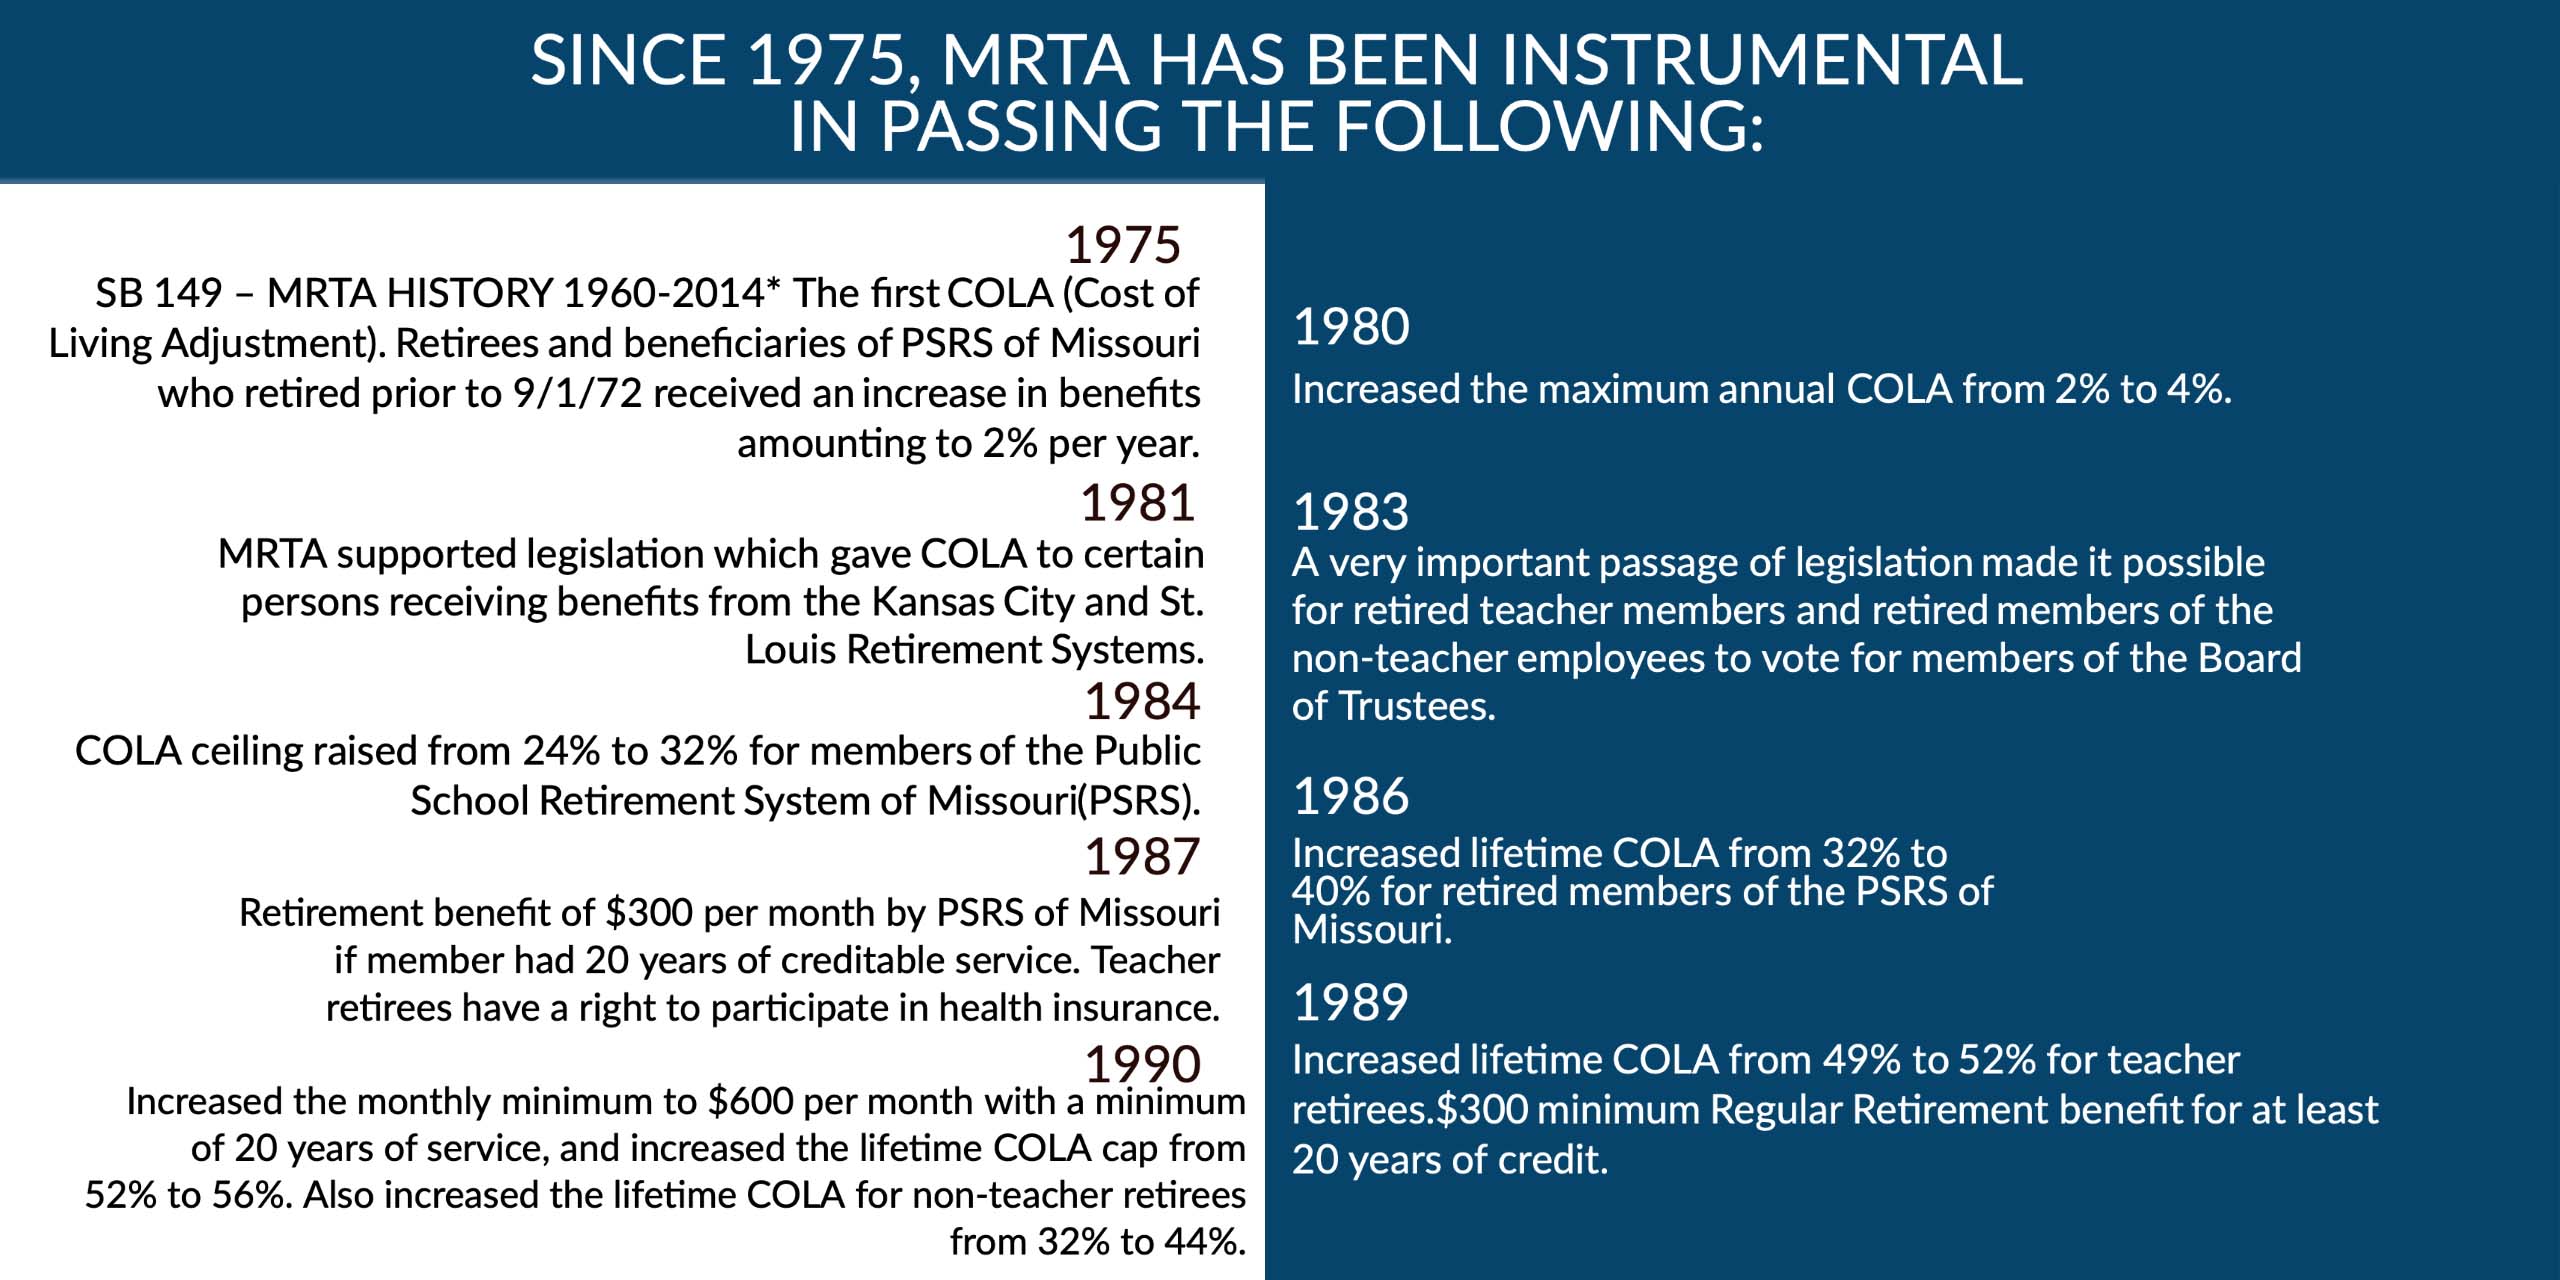 MRTA history facts